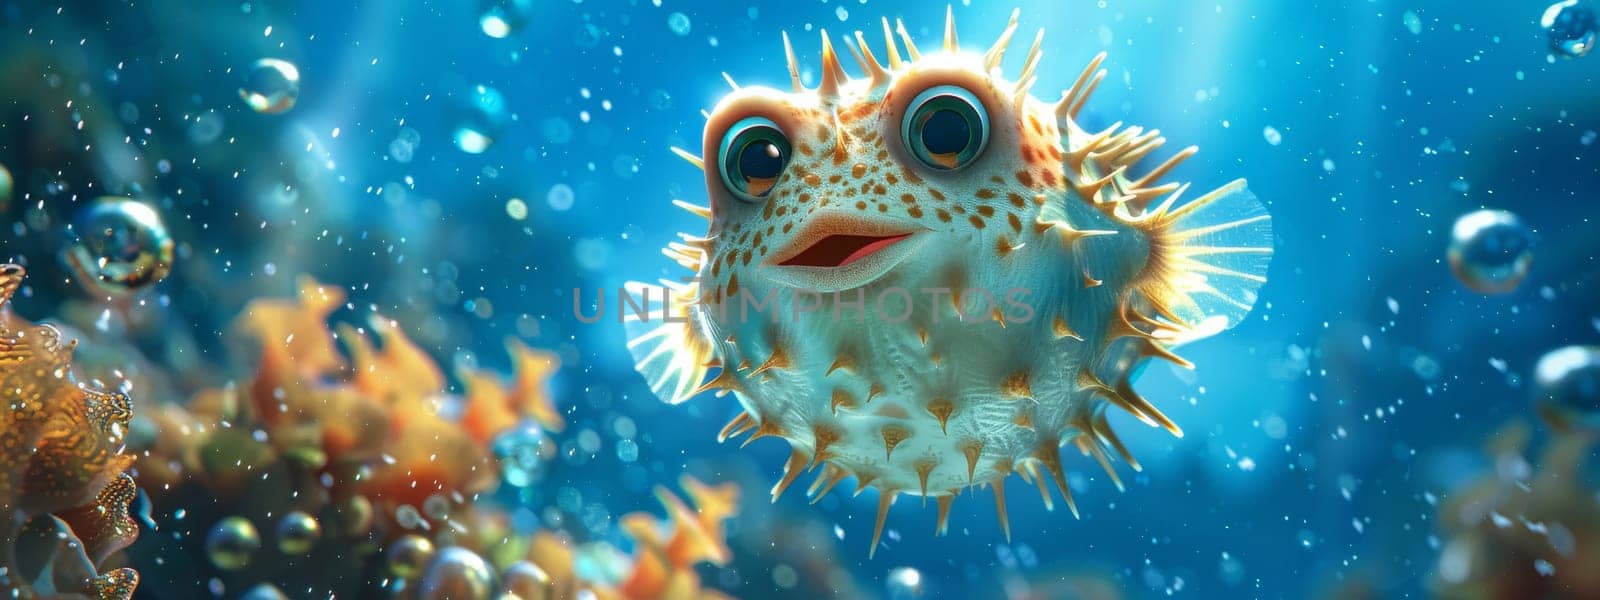 Pufferfish in an ocean underwater, nature wildlife concept